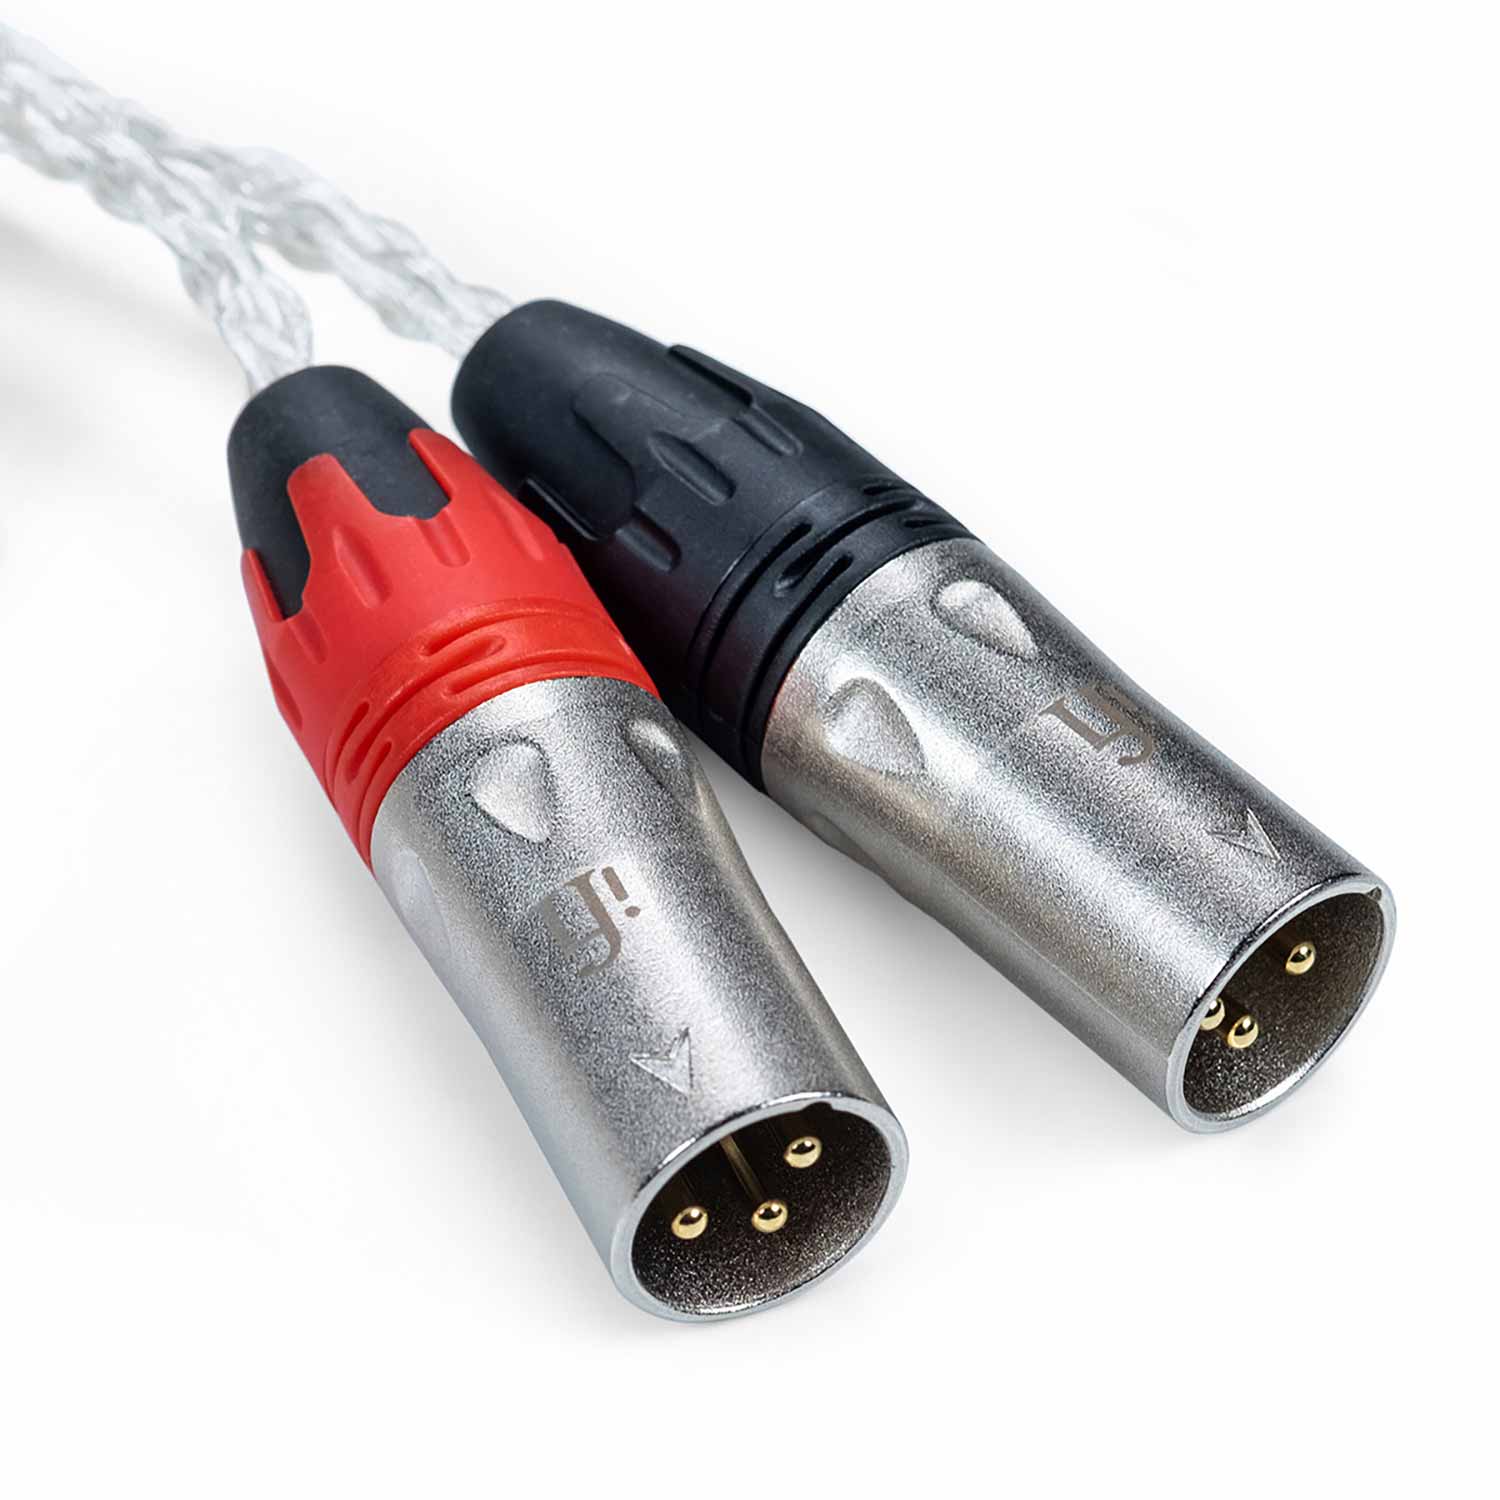 iFi 4.4mm to XLR Balanced Cable | HeadAmp